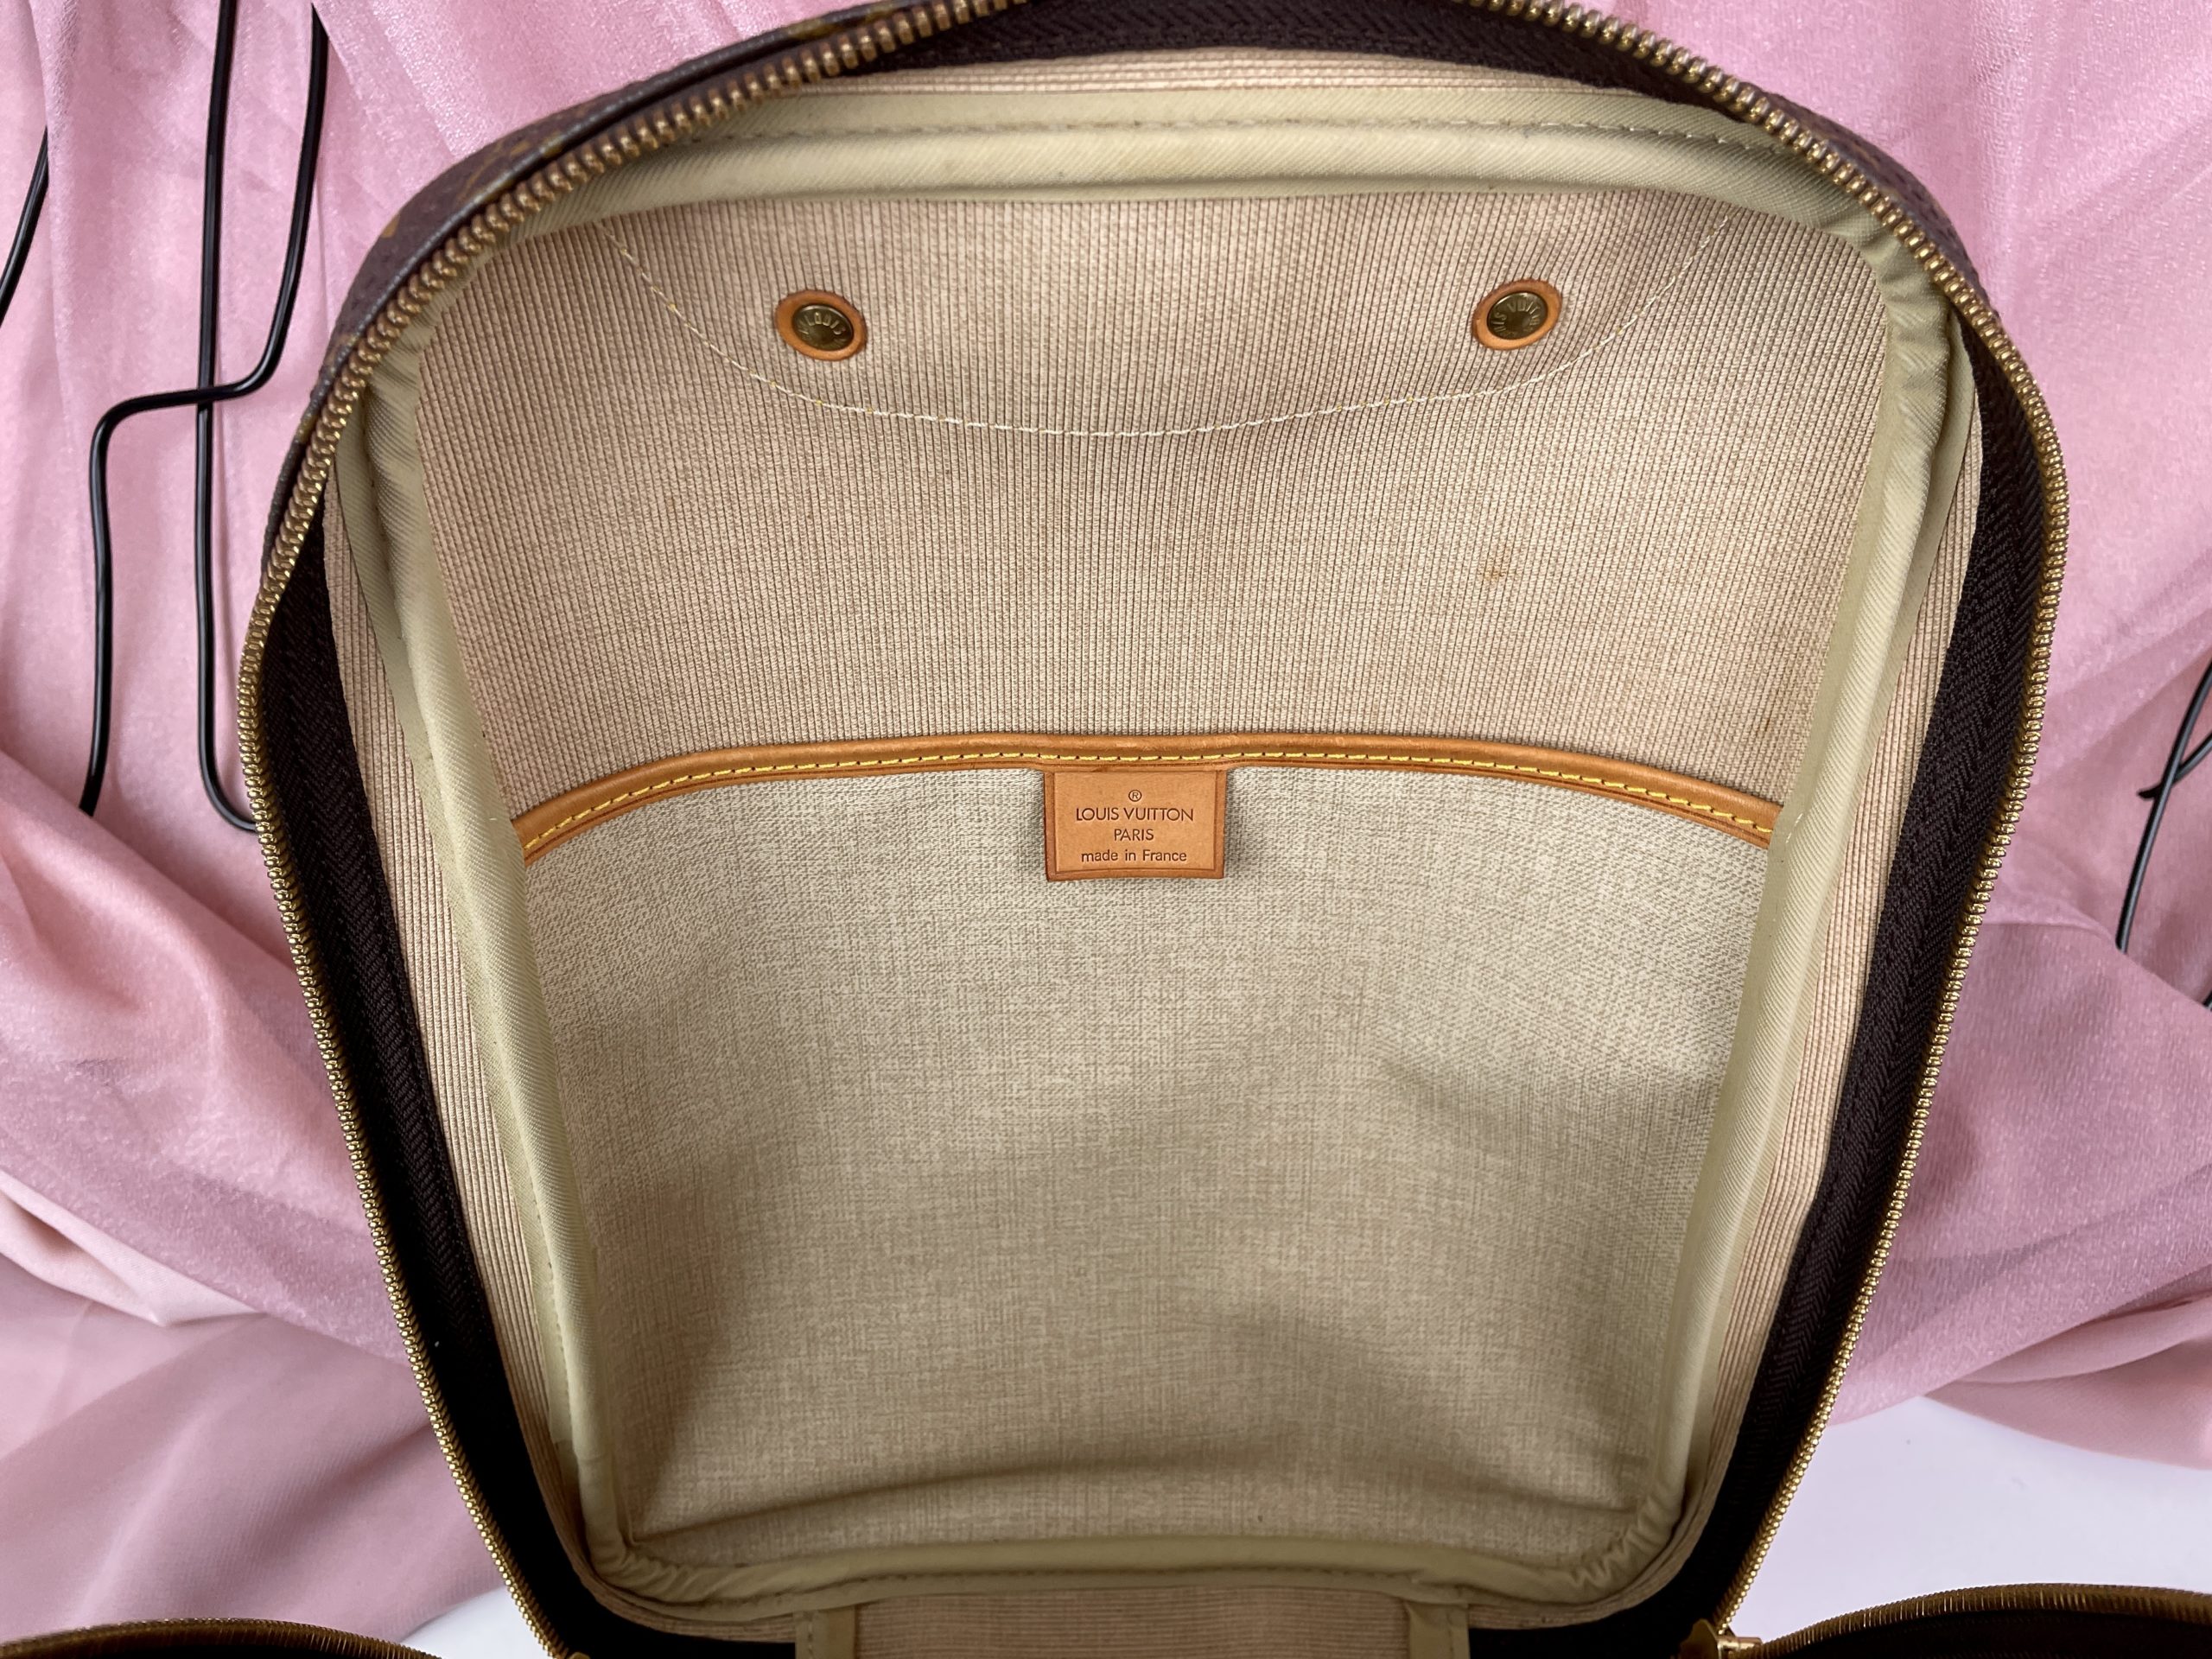 Mean Girls and their Louis Vuitton bags – TheLuxuryHandbag